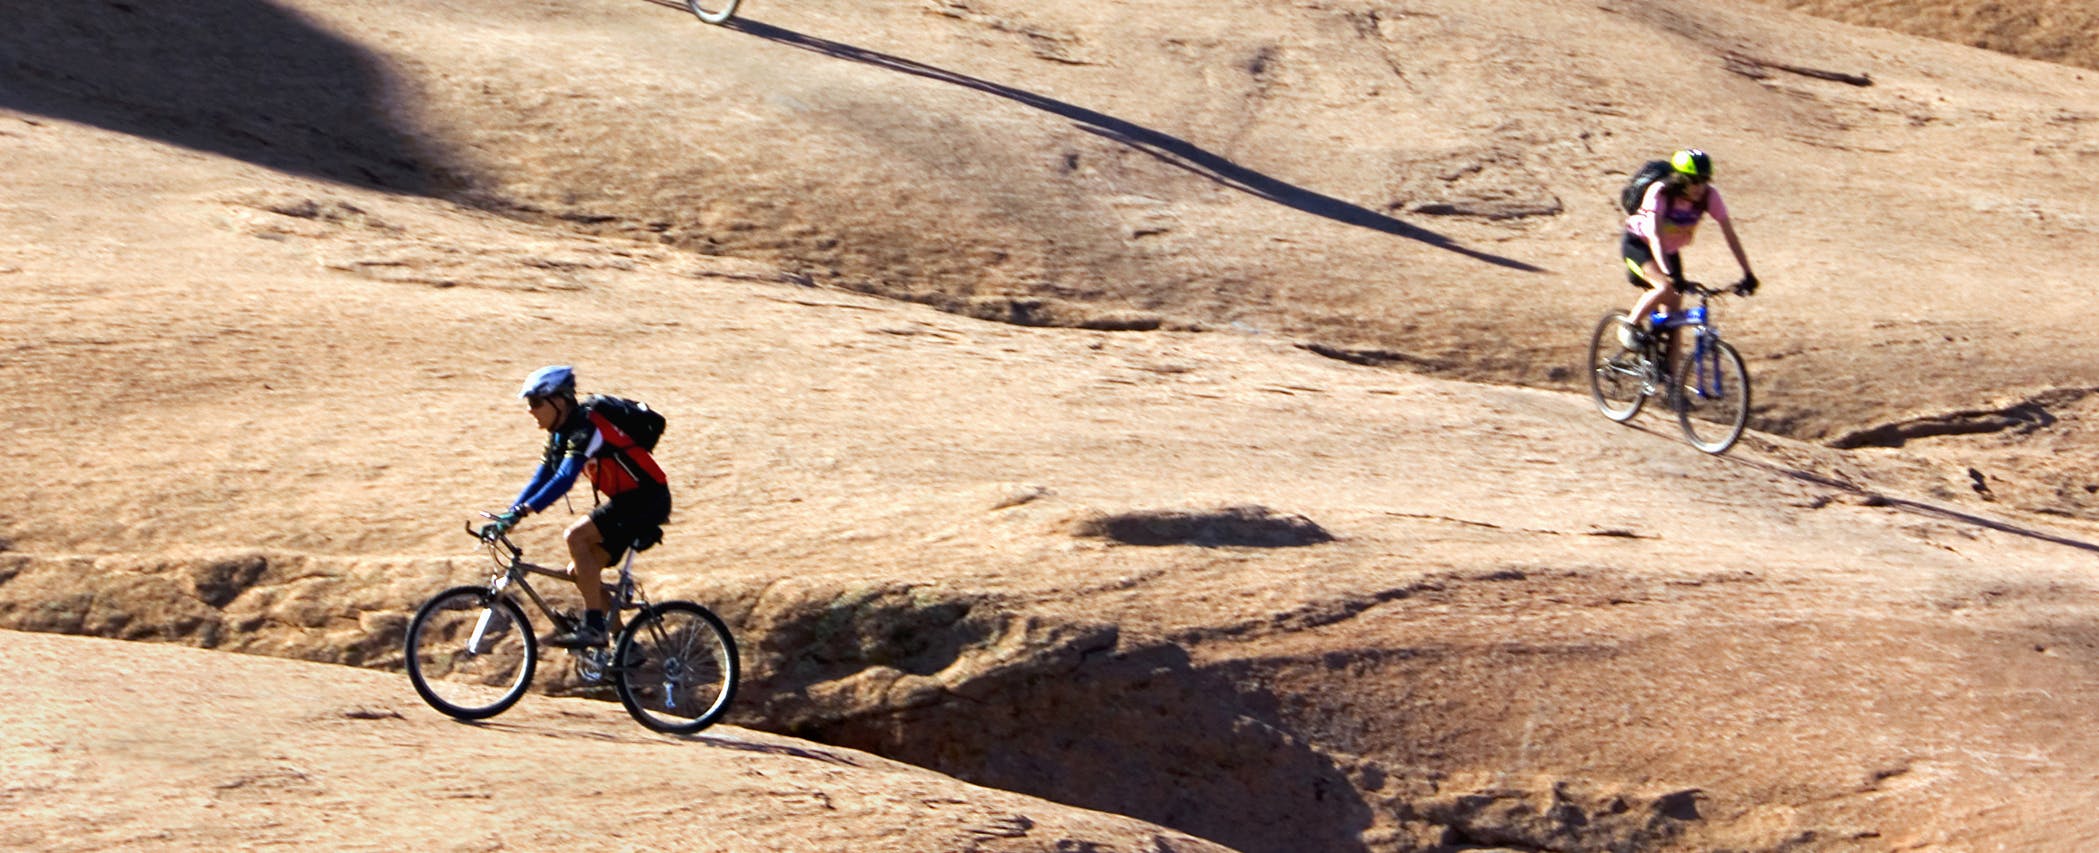 4 Pieces of Gear for Mountain Biking in Moab, Utah